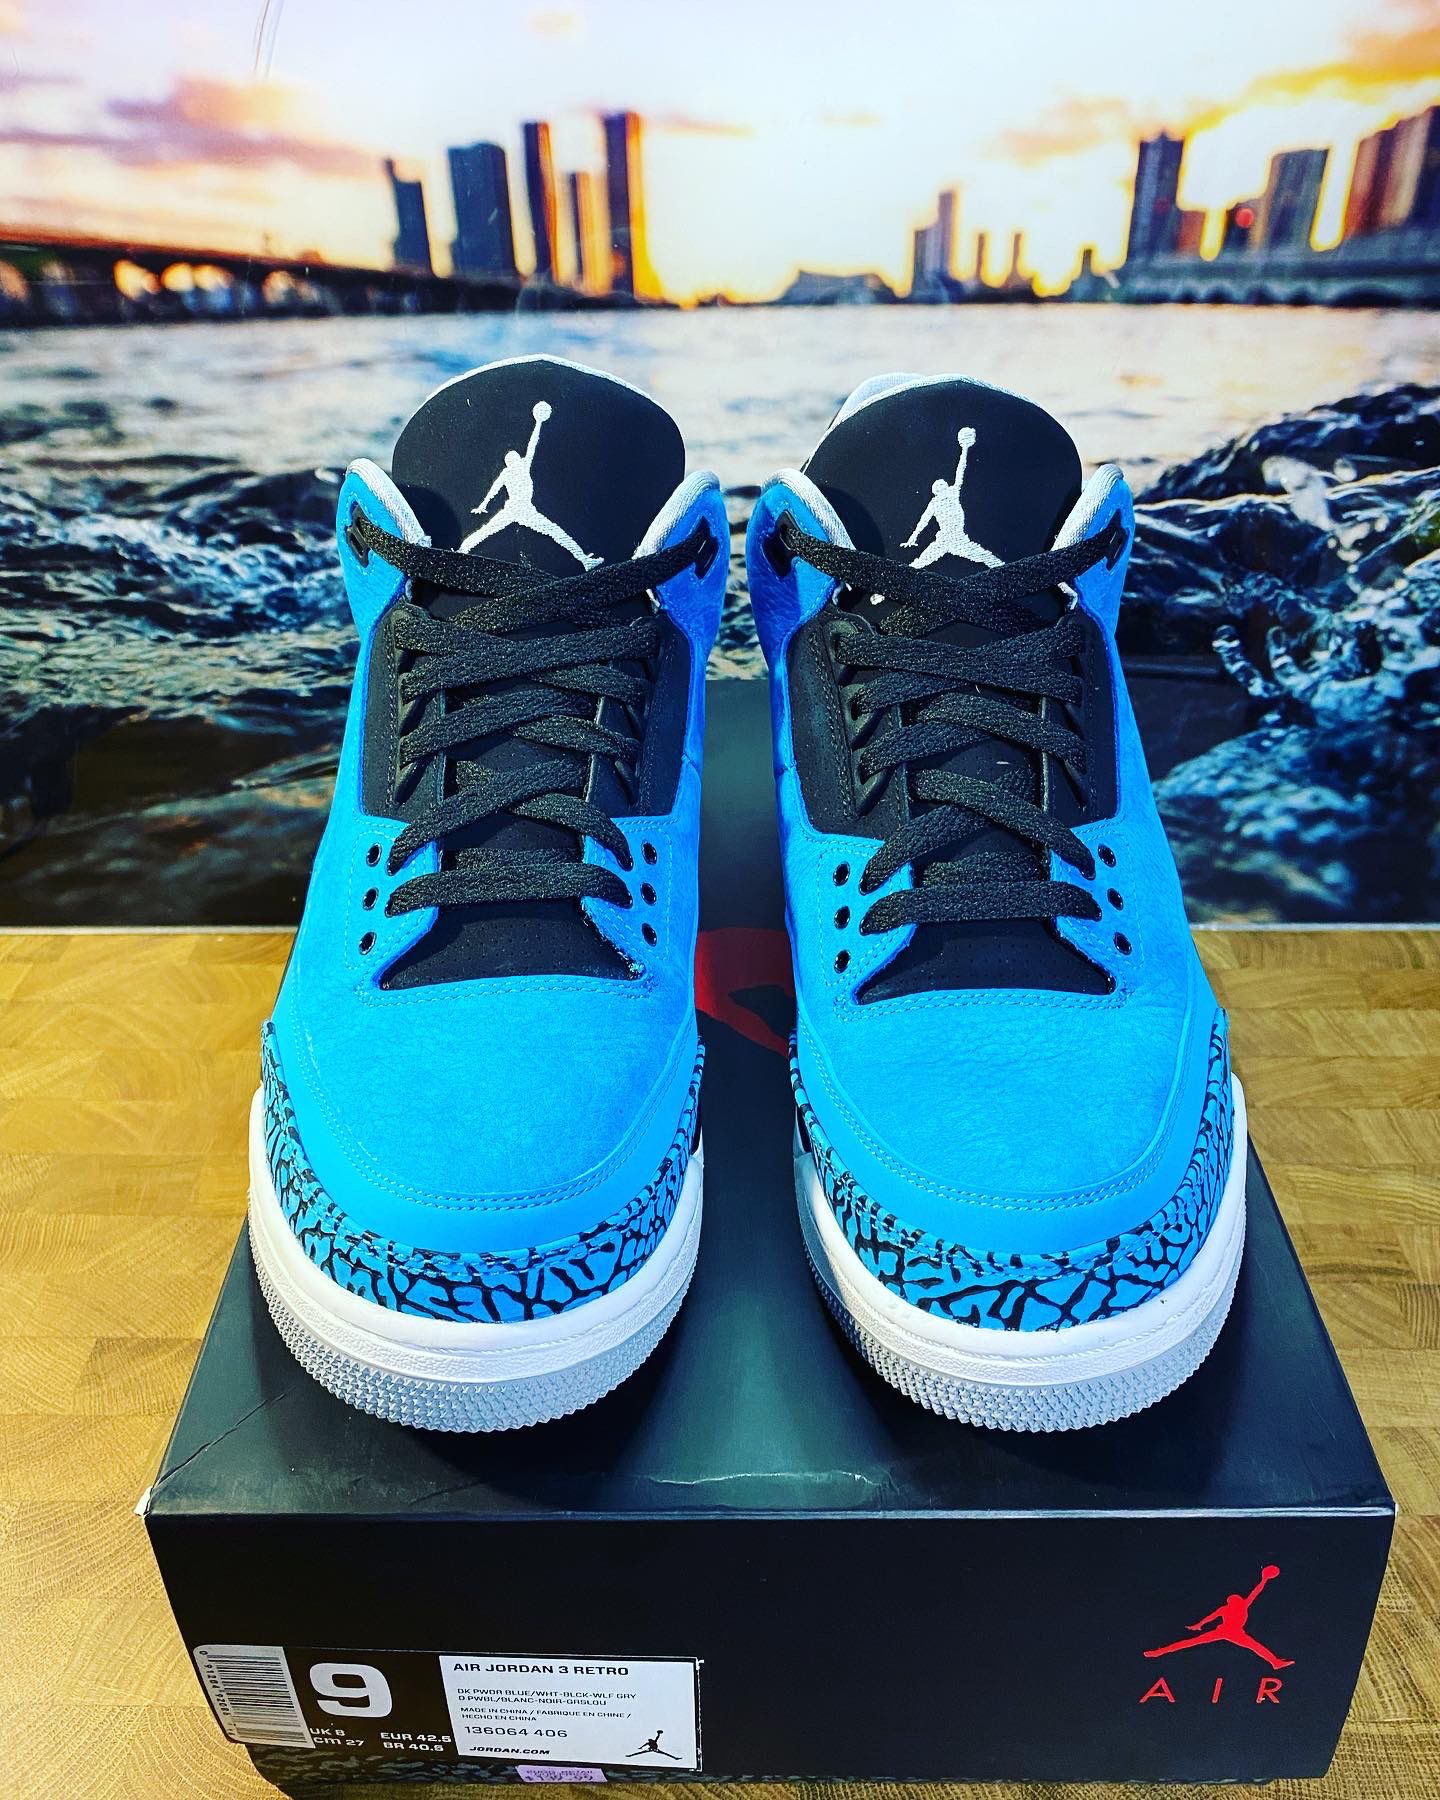 Air Jordan 3 Retro Powder Blue 2014 